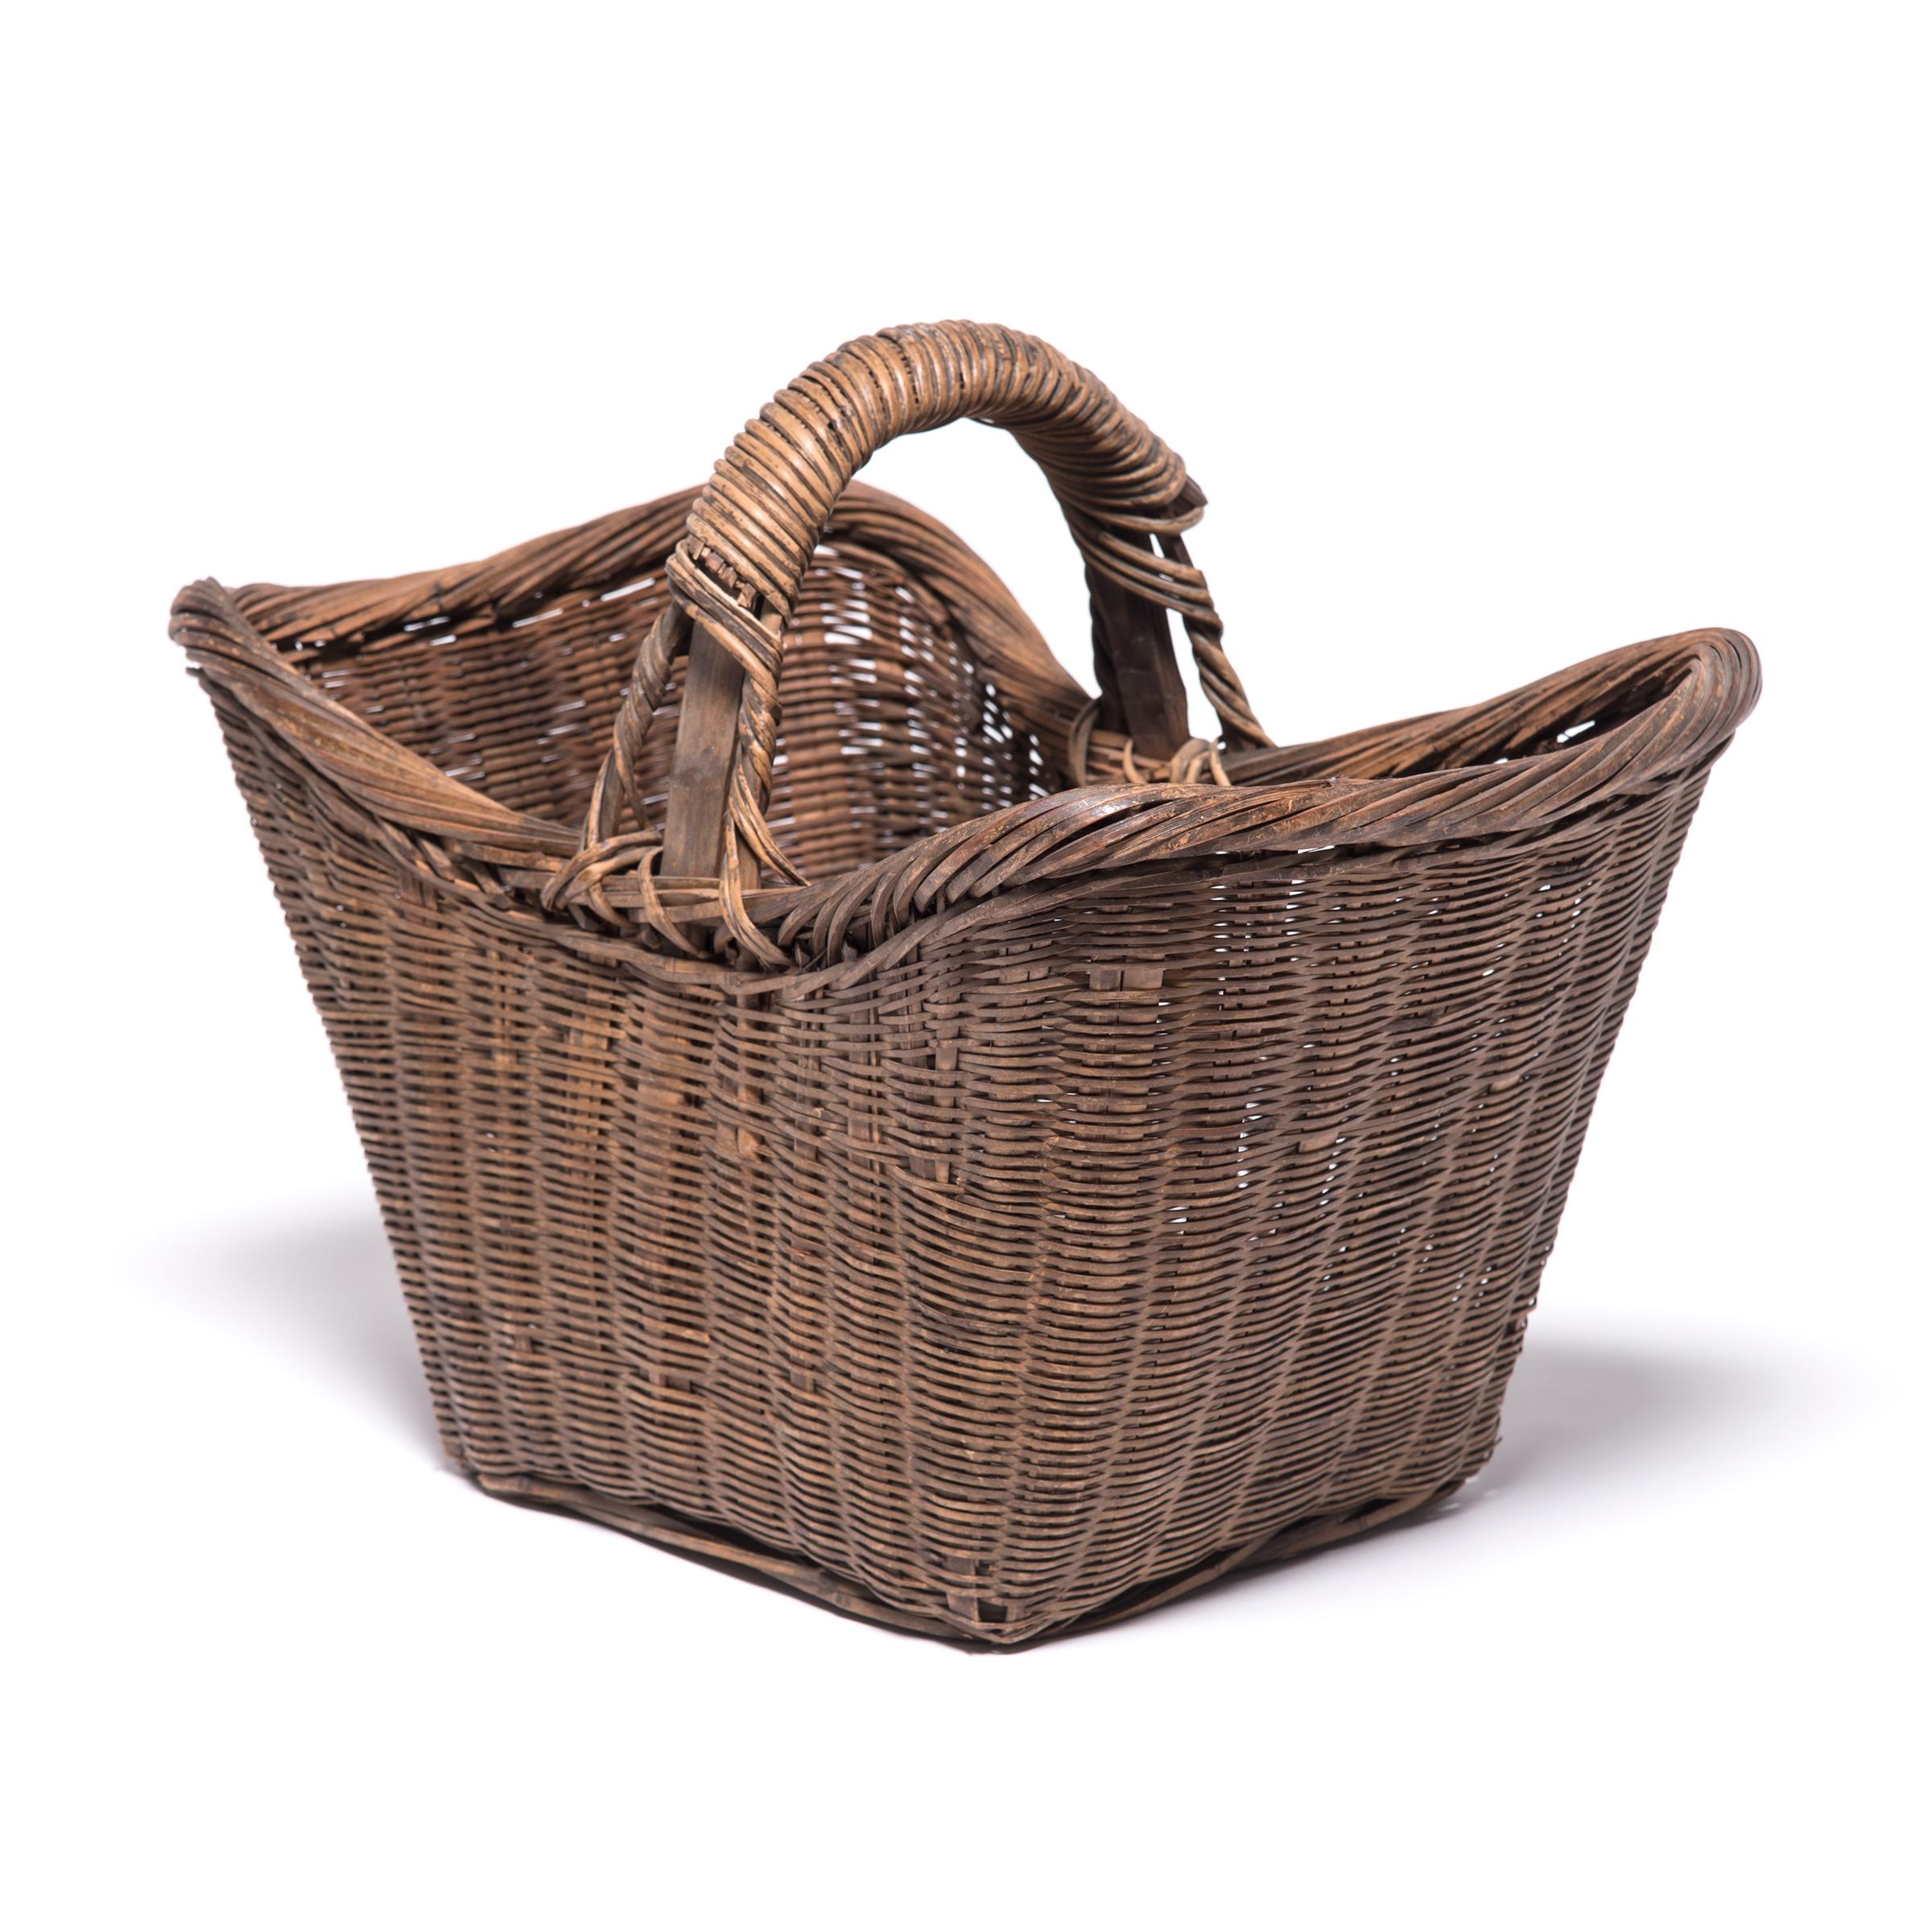 20th Century Chinese Twist Woven Market Basket